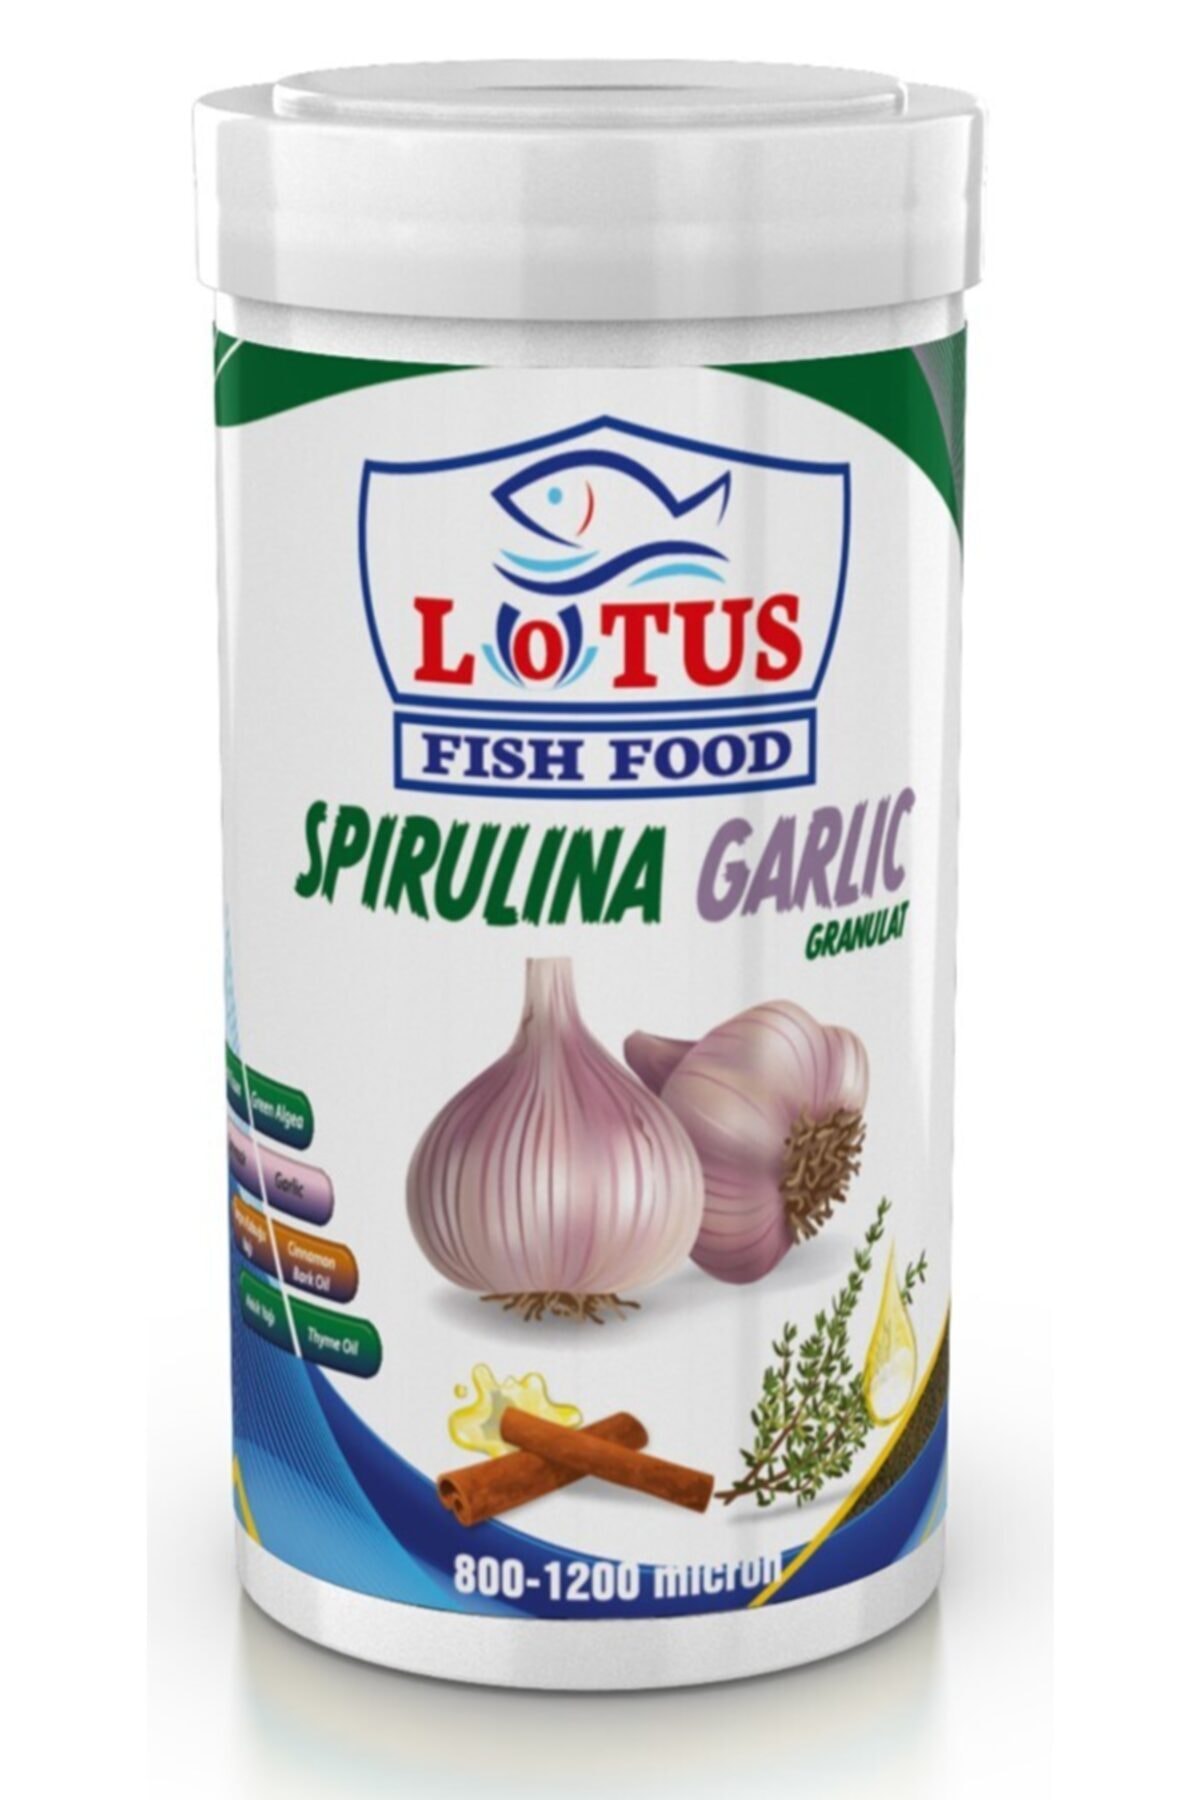 Lotus Spirulina Garlic Granulat 100 Ml Balık Yemi